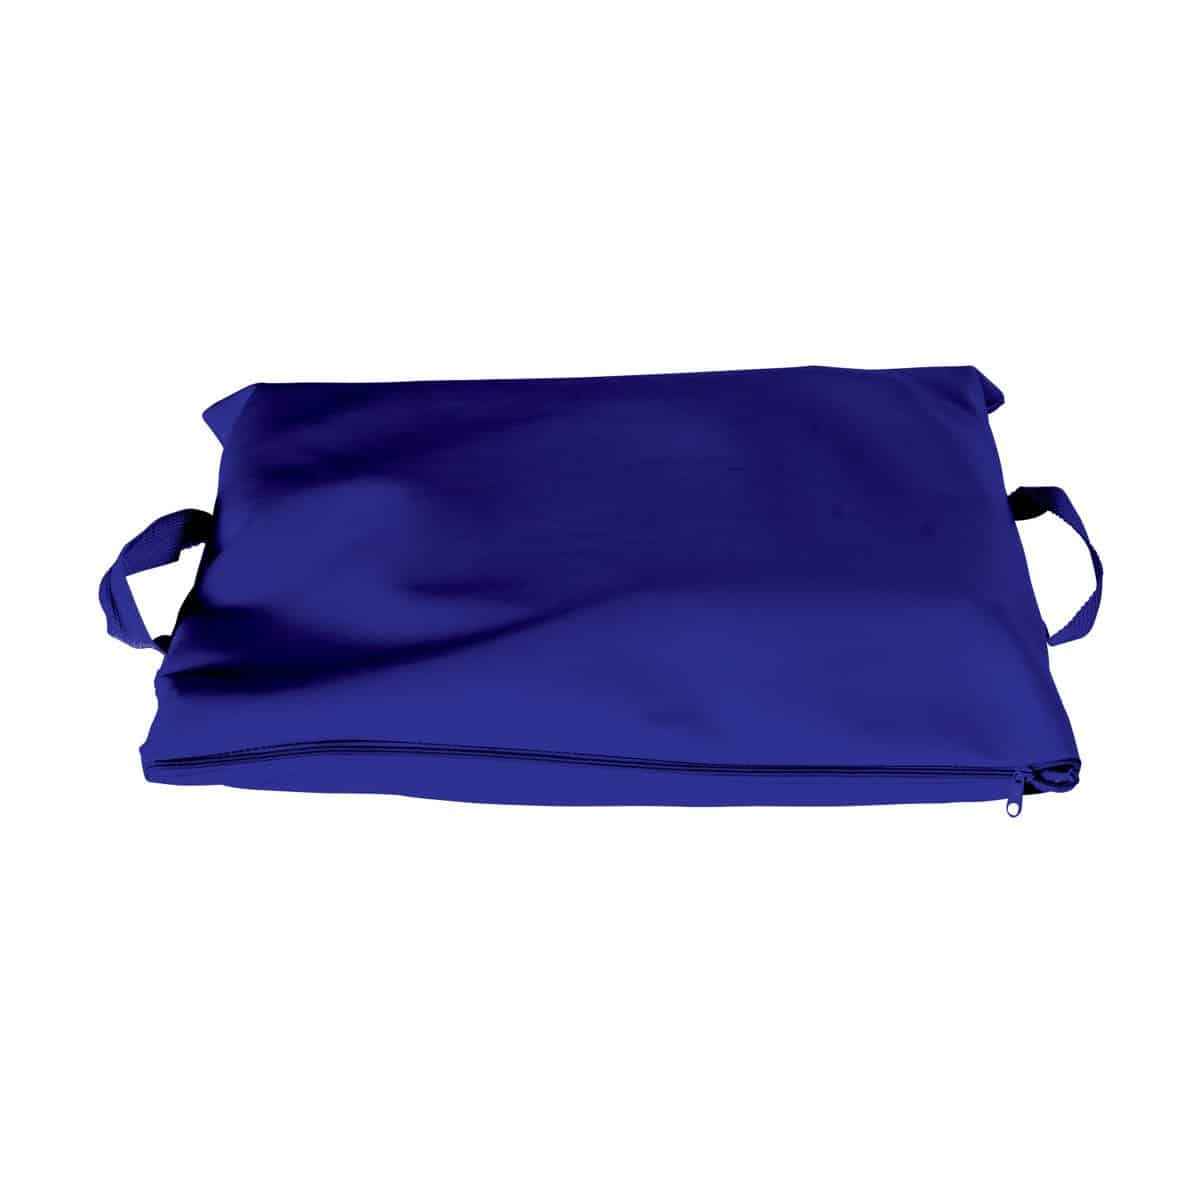 Duro-Med Flotation Cushion with Navy Poly/Cotton Cover - 100%-Gel - Senior.com Cushions